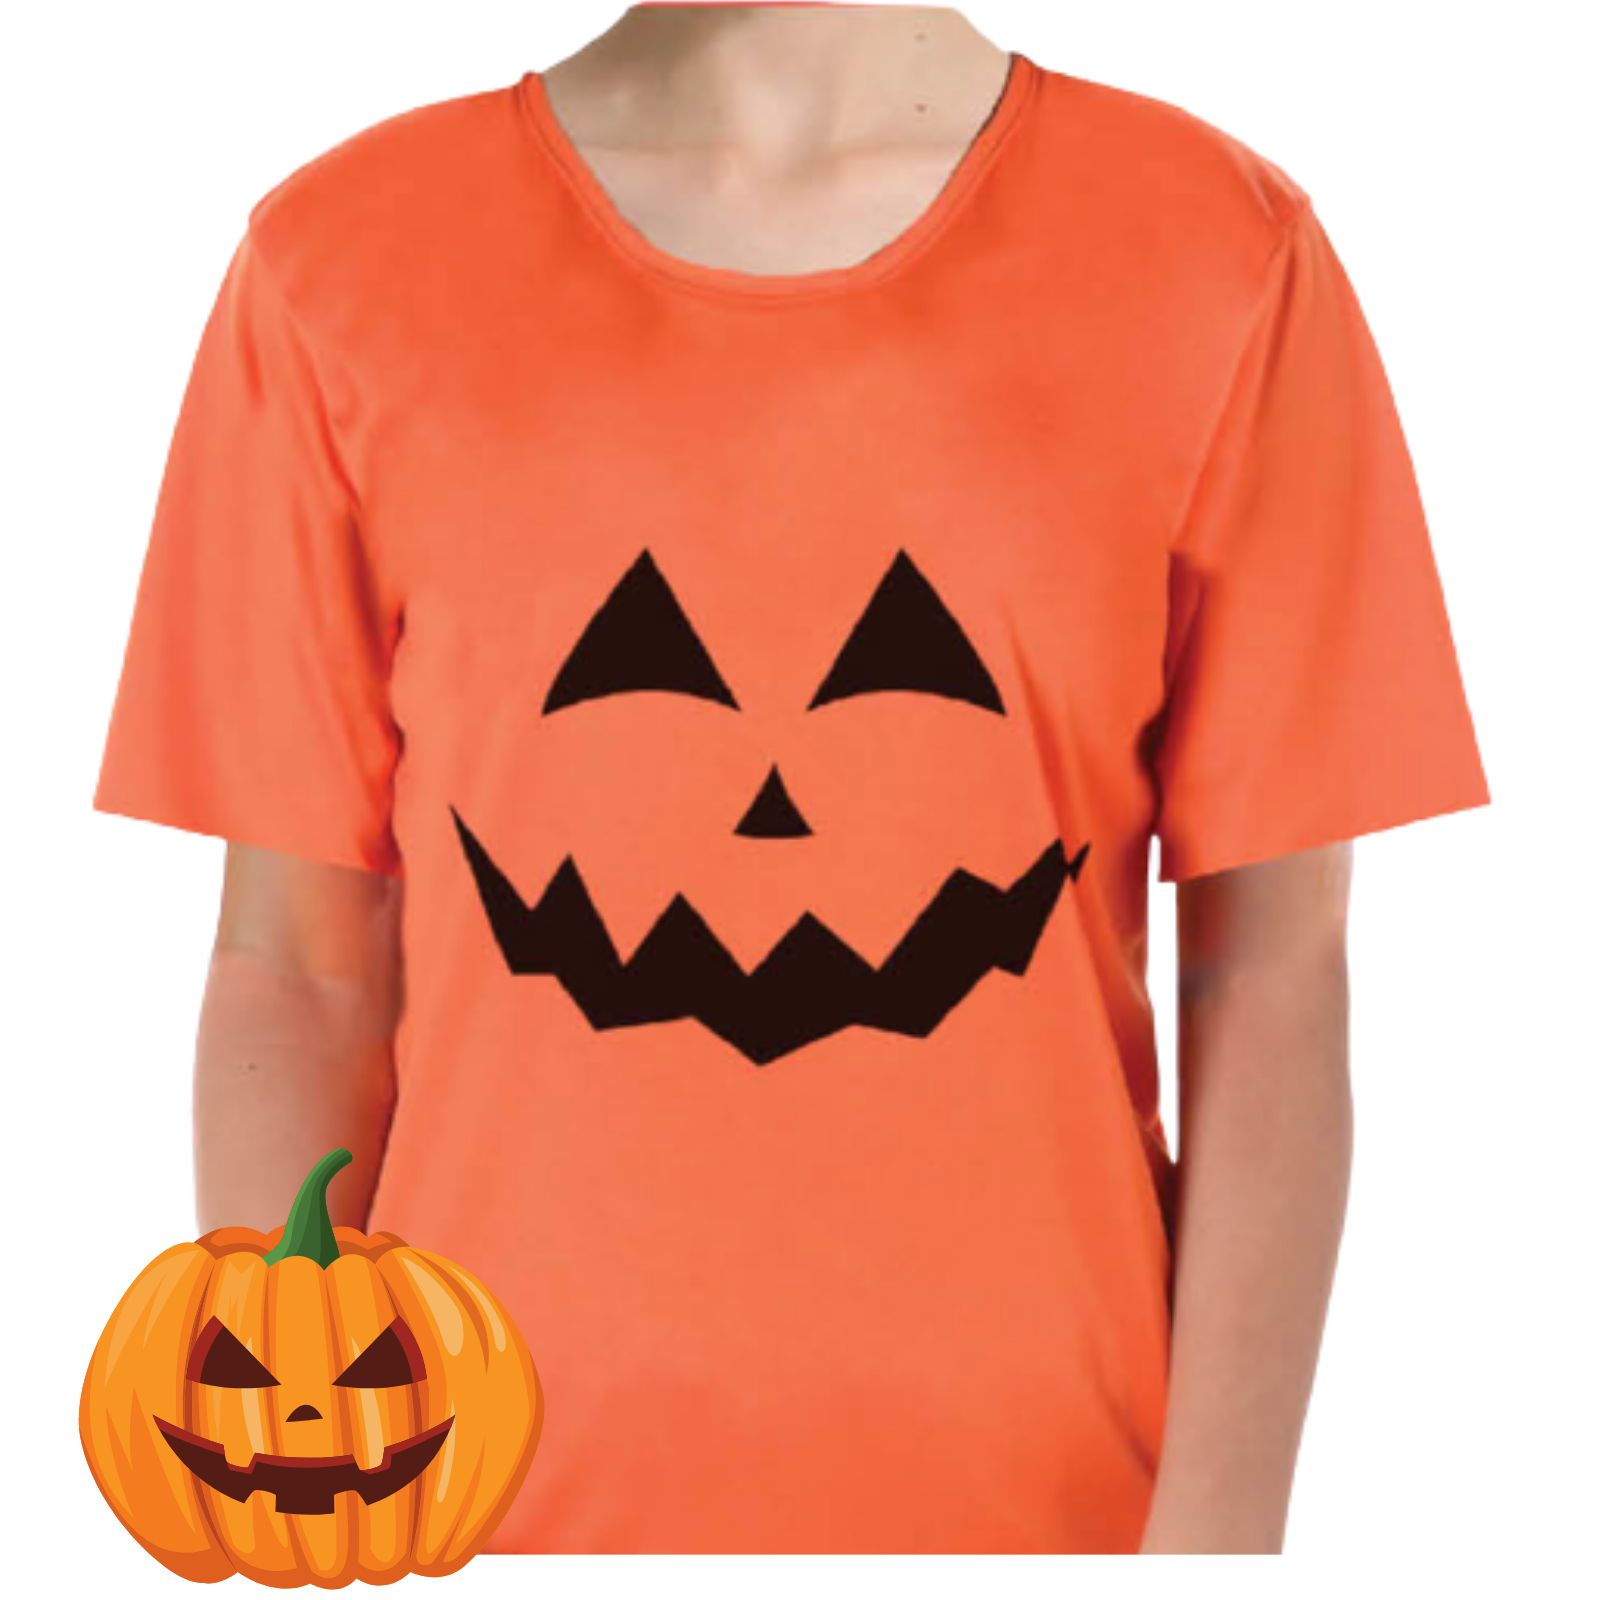 Kids Halloween T-Shirt Pumpkin Childrens Orange Jack O'Lantern Top - L (10-12 Years Old)